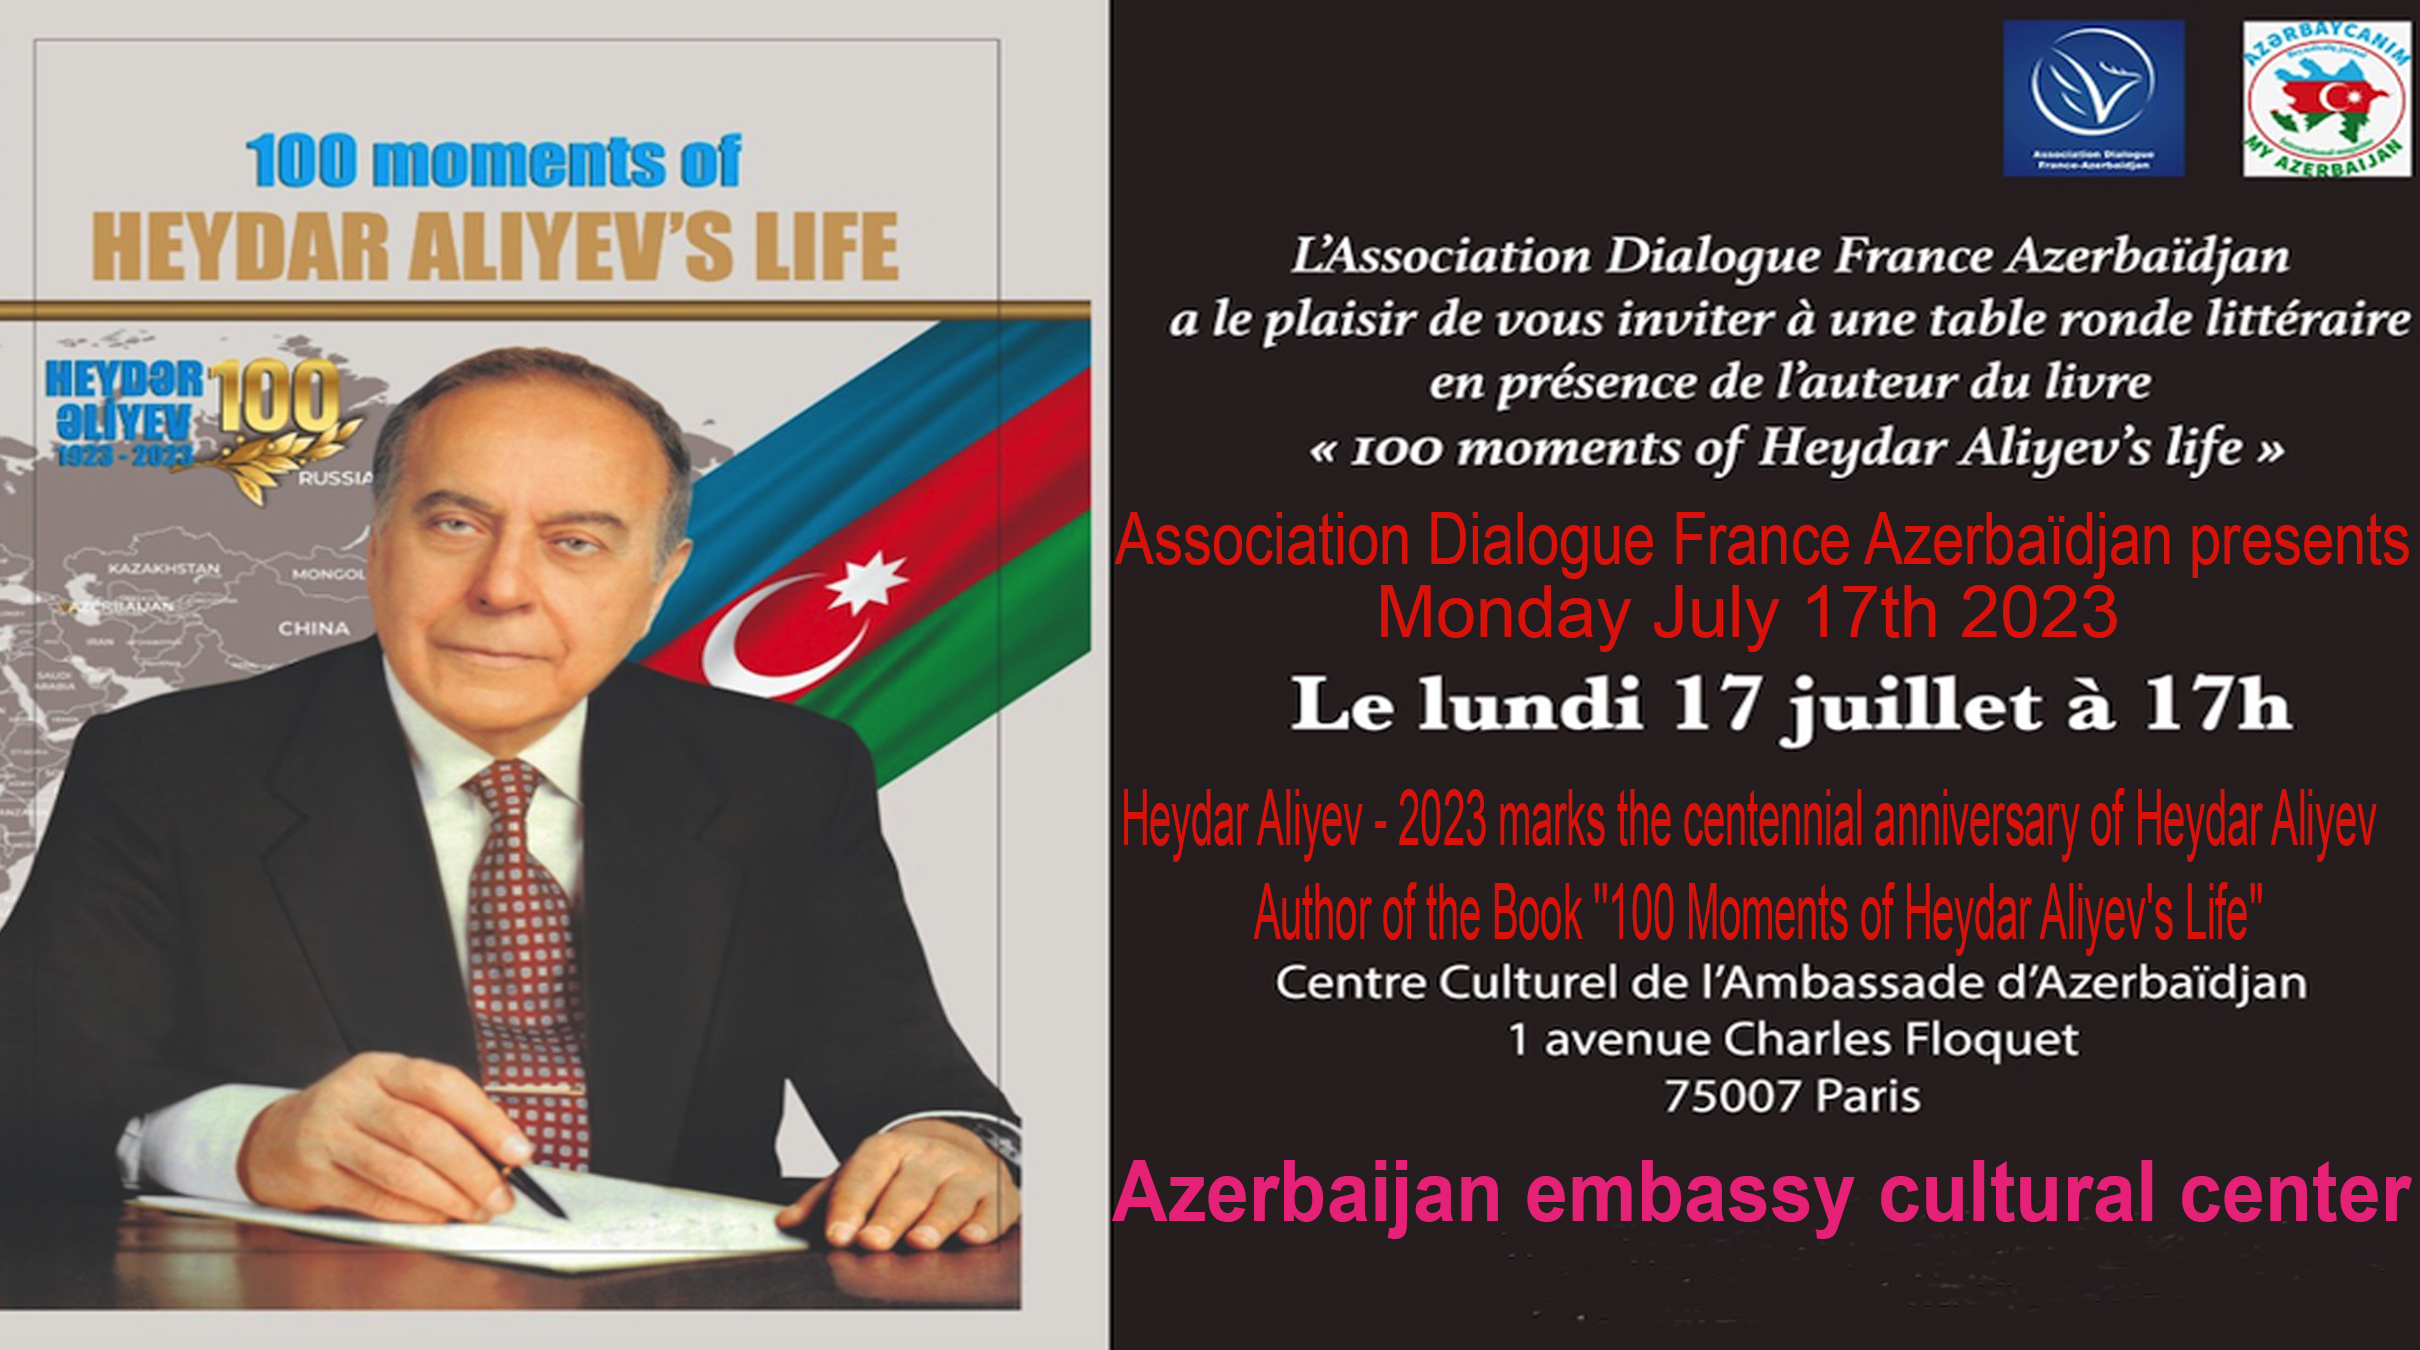 AFRICA-VOGUE-COVER-Heydar-Aliyev-2023-marks-the-centennial-anniversary-of-Heydar-Aliyev-Author-of-the-Book-100-Moments-of-Heydar-Aliyev's-Life-DN-AFRICA-Media-Partner